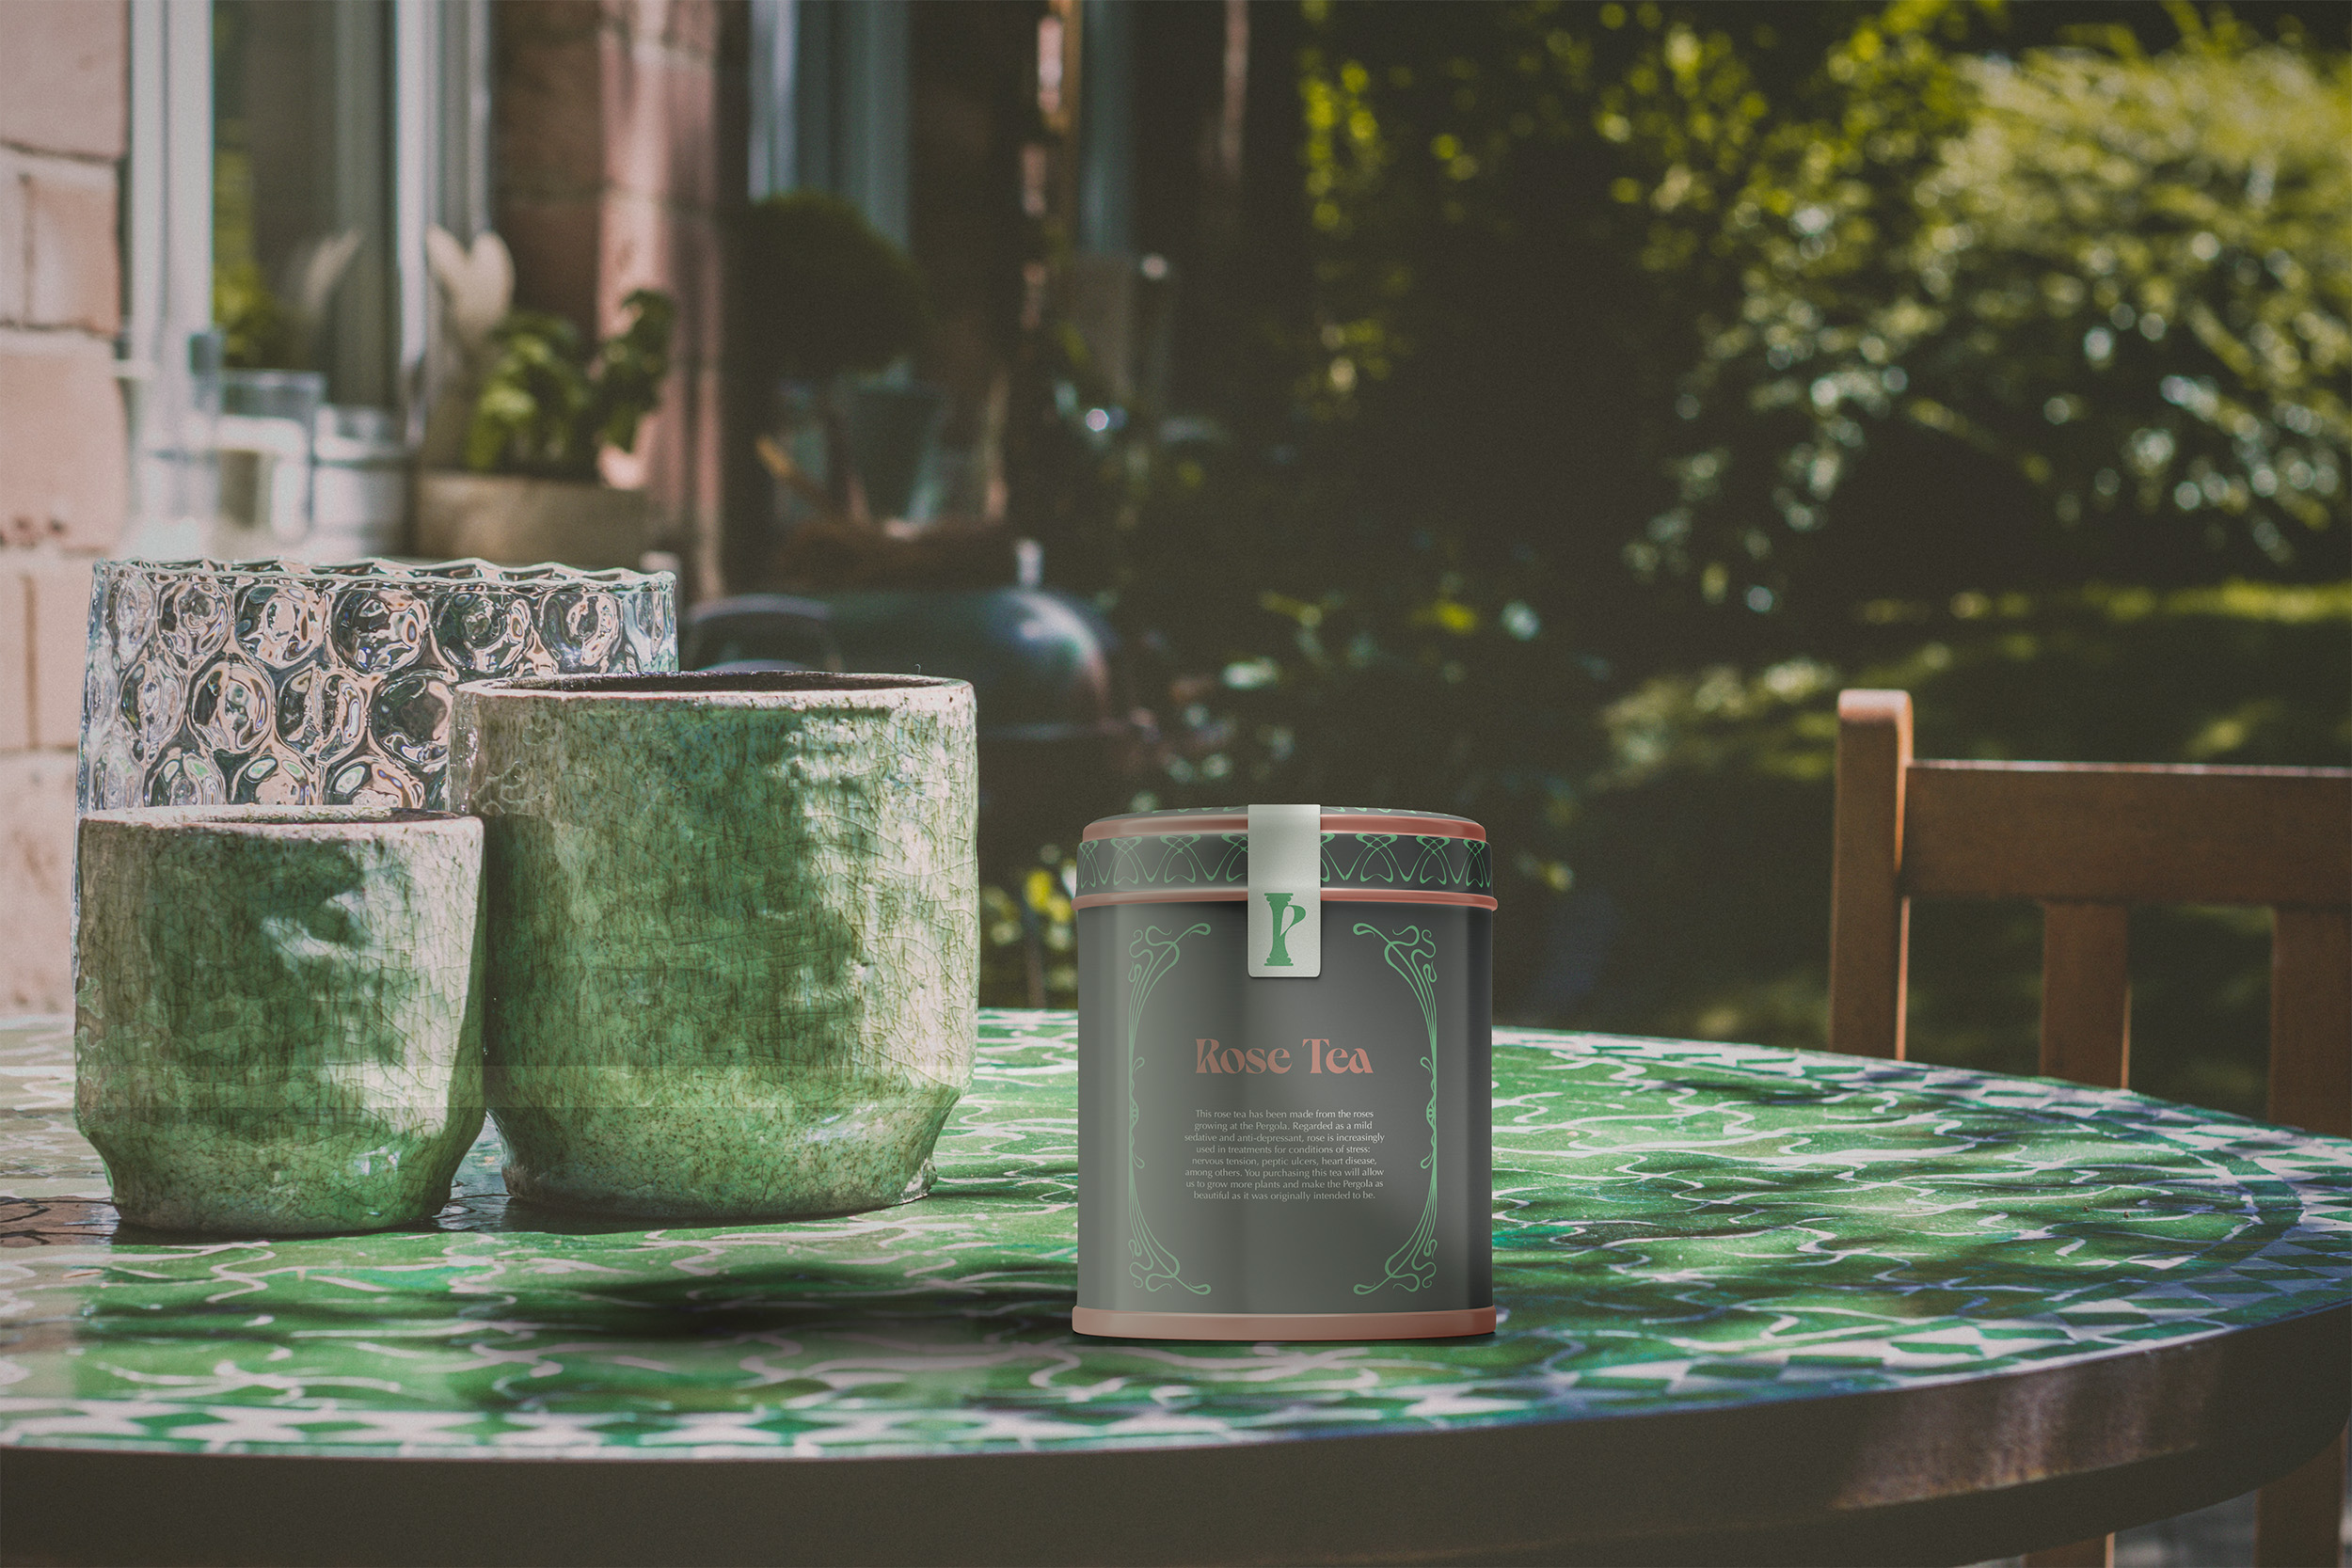 A tin of Pergola's own tea brand designed by Tatiana Diakonova, BA Graphic Communication, on top of an outdoor table.